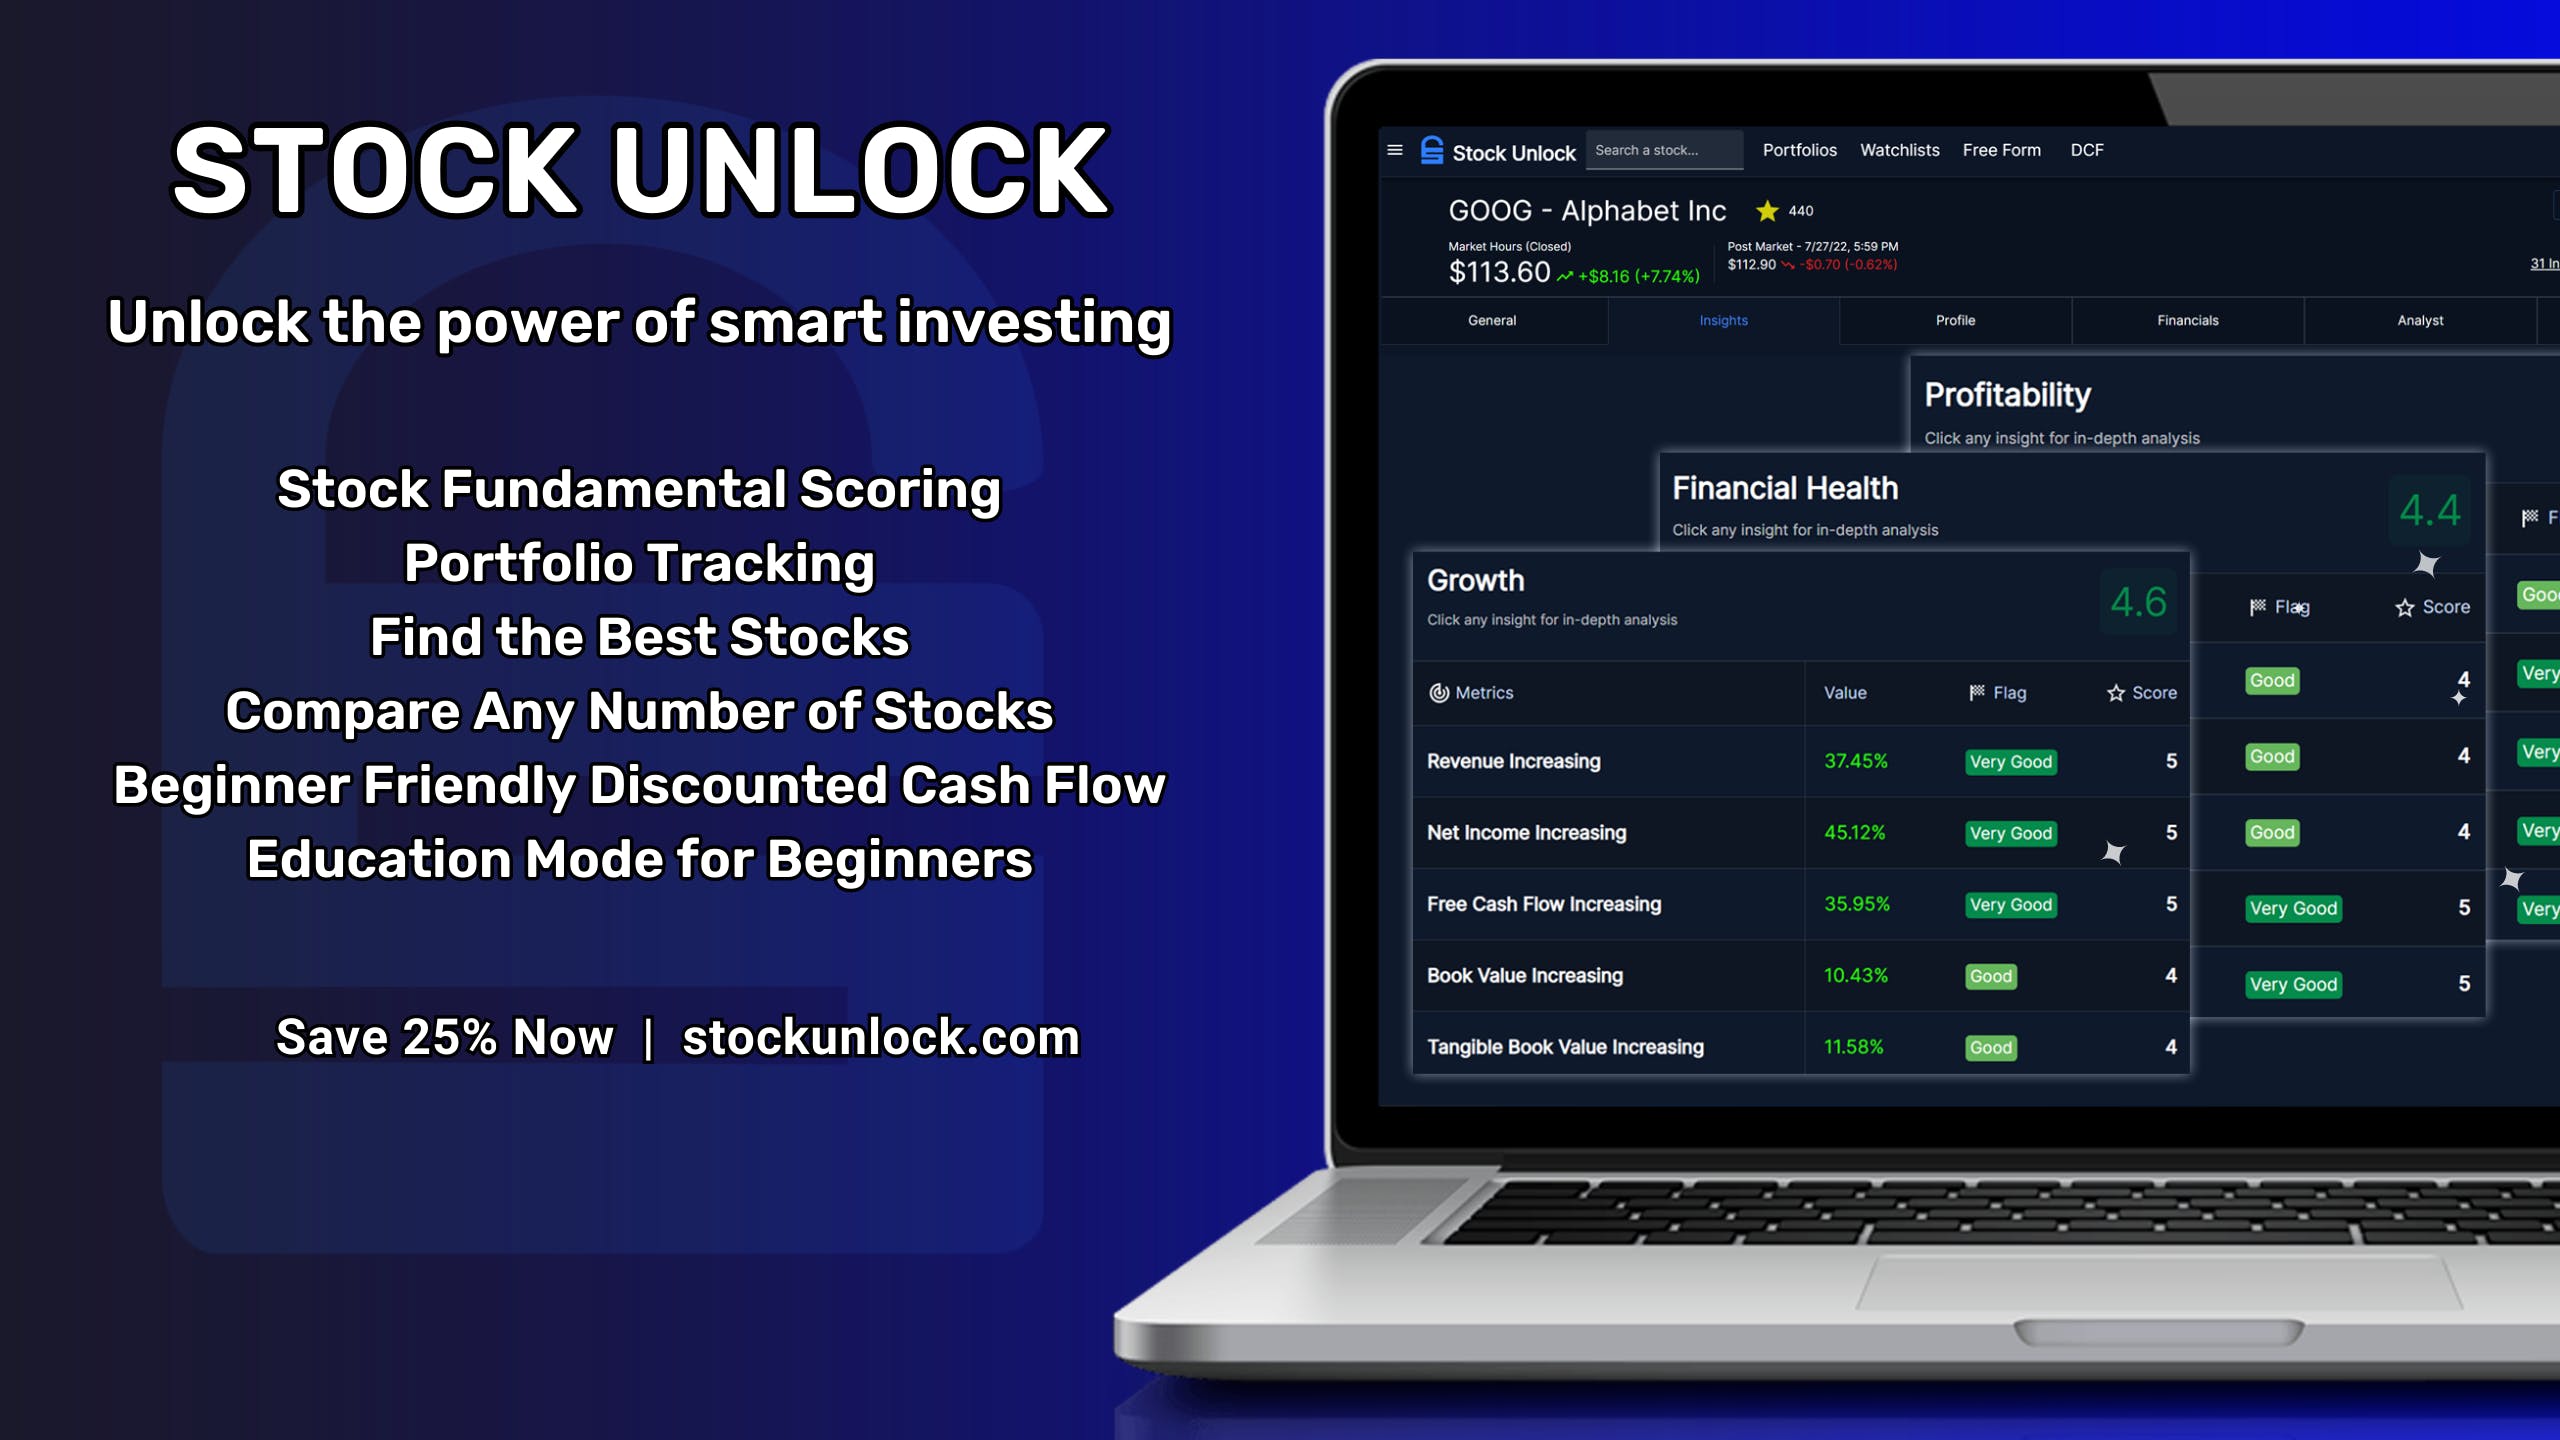 Stock Unlock media 2